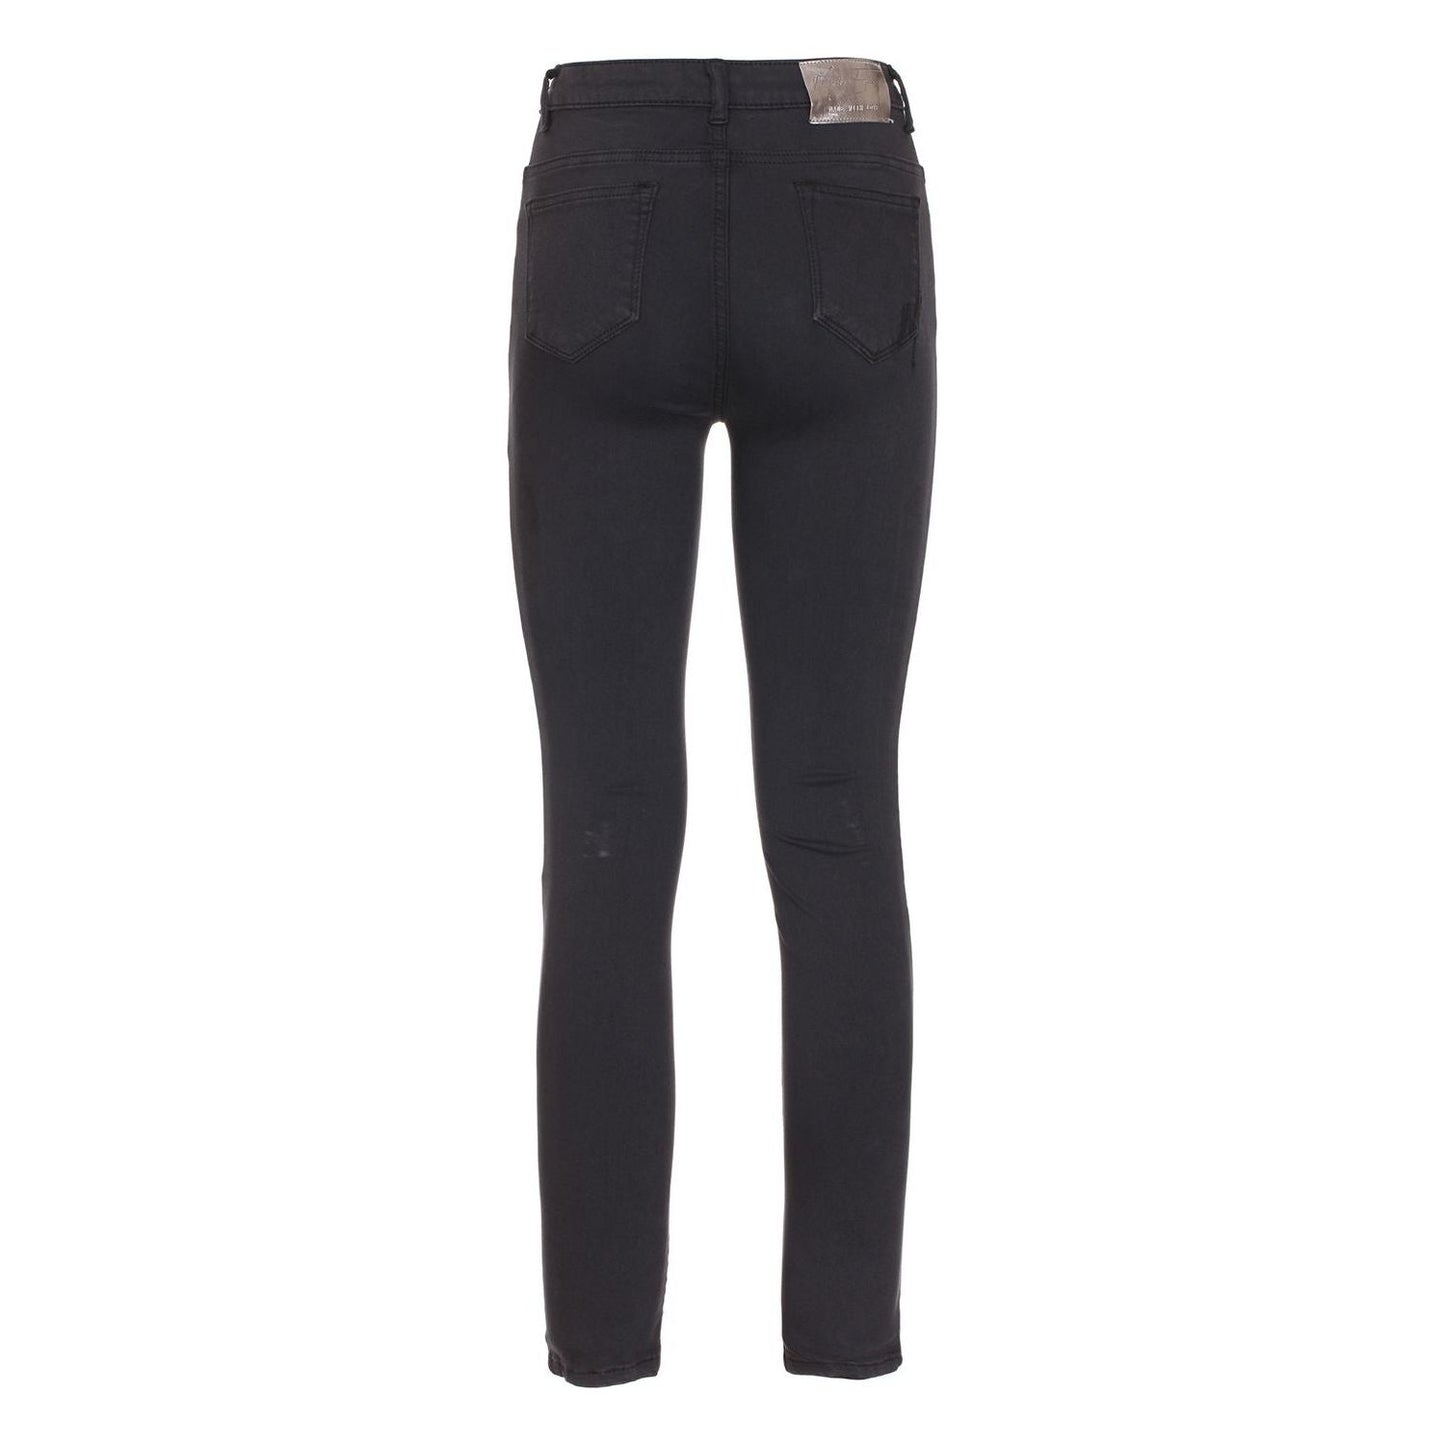 Maison Espin Chic High-Waist Super Skinny Olivia Pants black-cotton-jeans-pant-1 Jeans & Pants stock_product_image_1648_1268719736-34a5c54b-32b.jpg